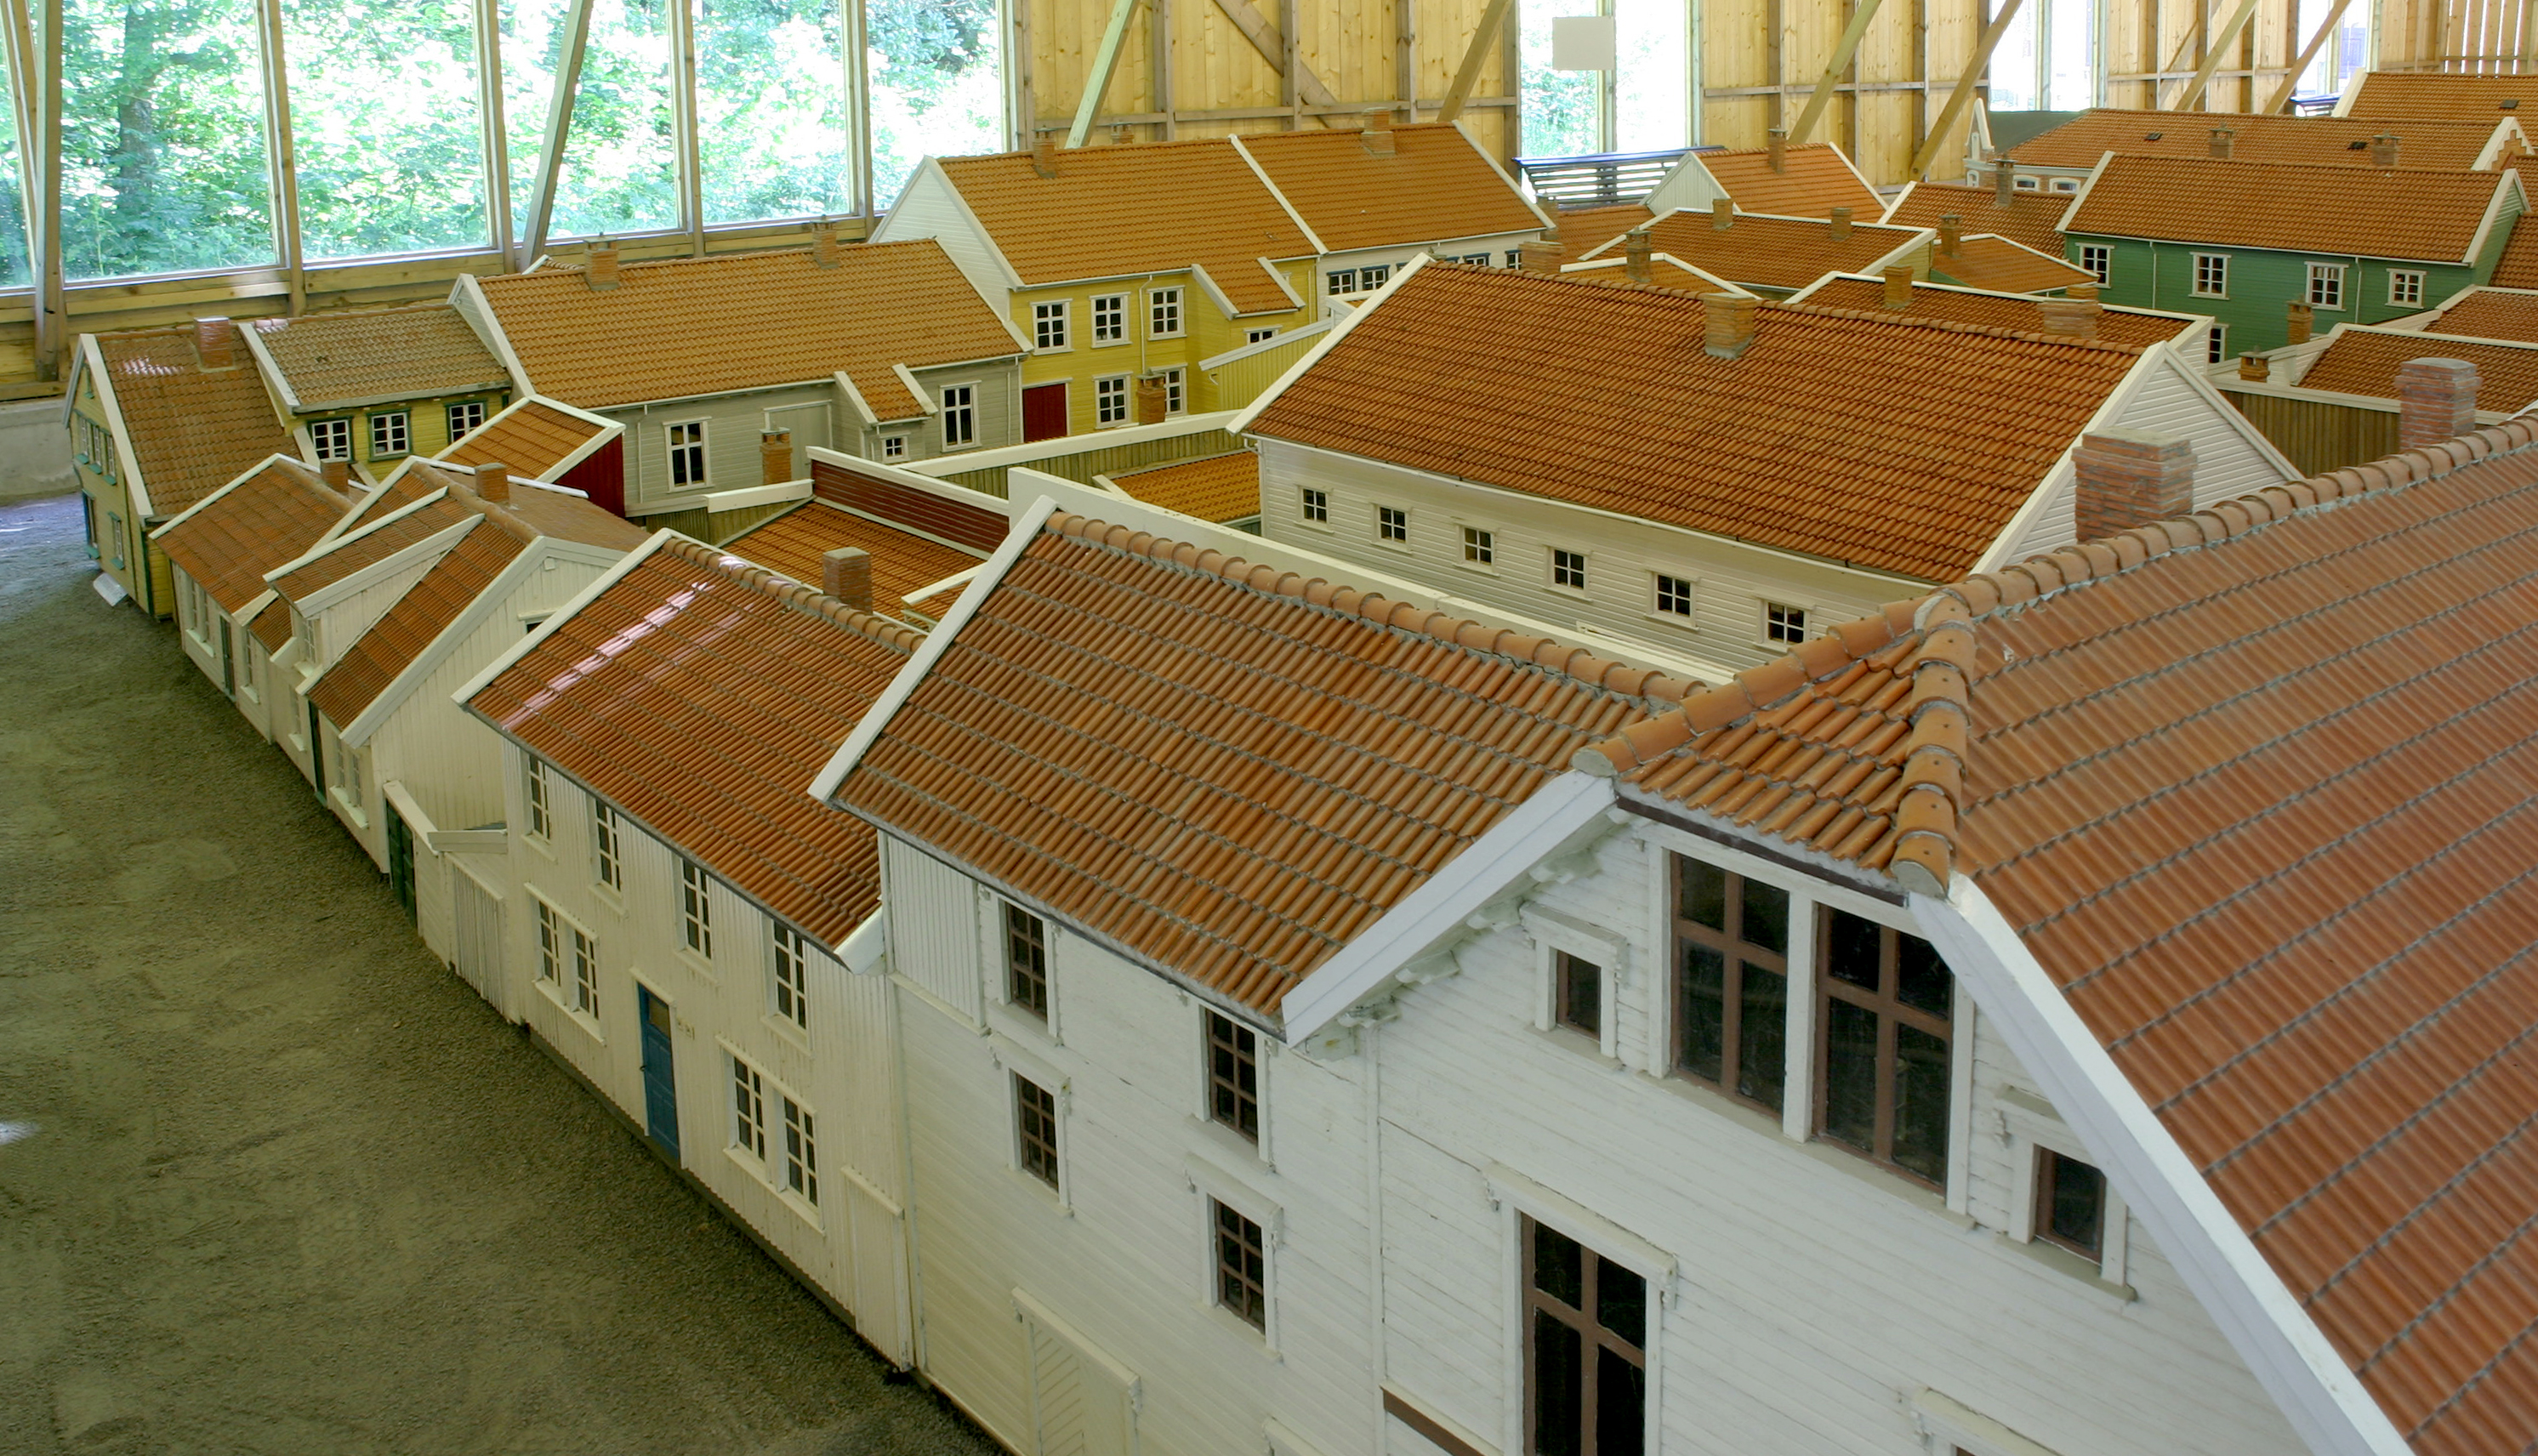 Minibyen på Vest-Agder Fylkesmuseum